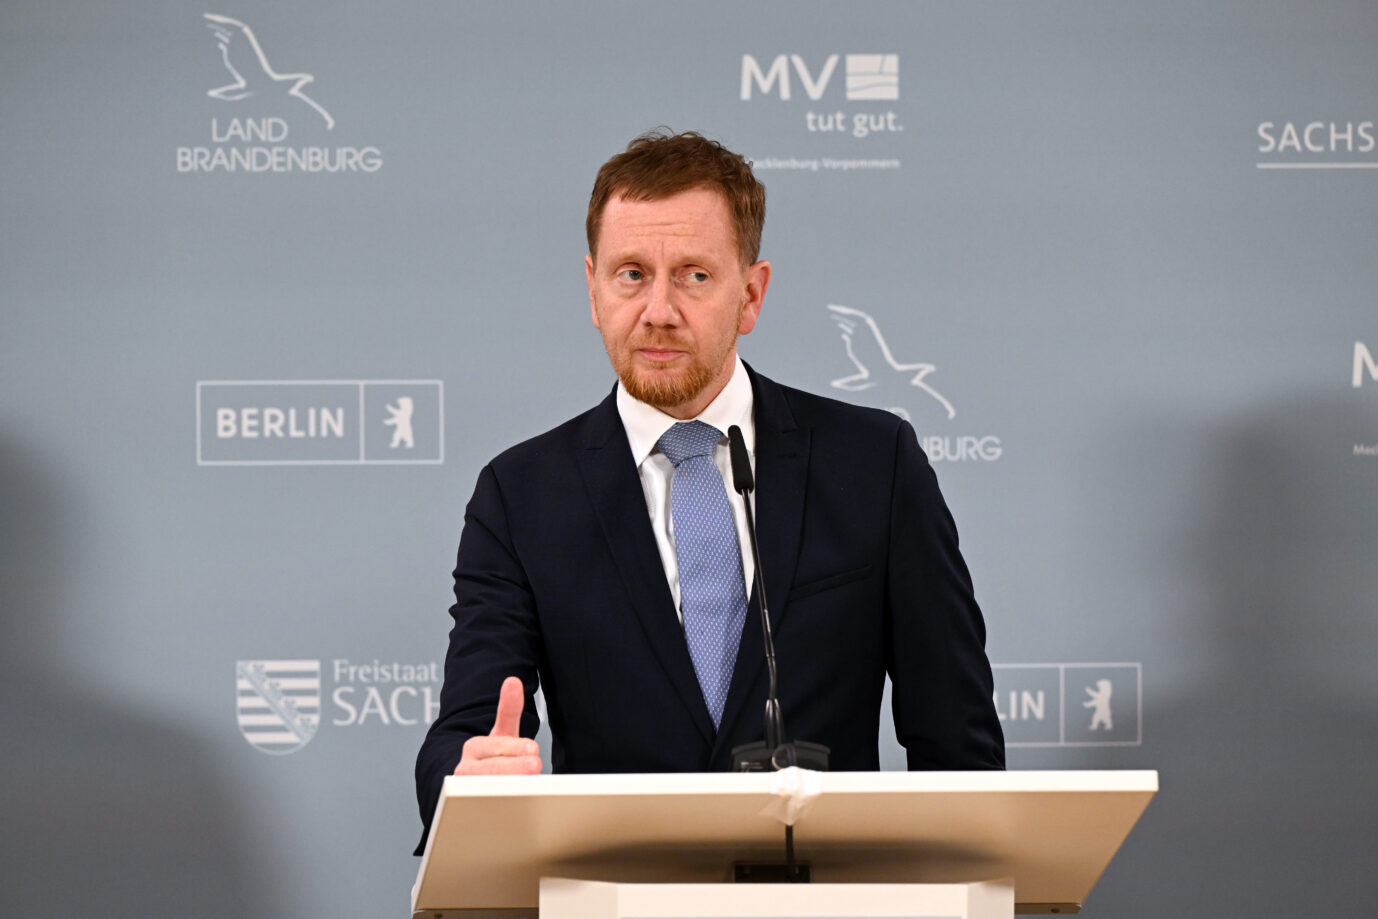 Sachsens Ministerpräsident Michael Kretschmer blickt kritisch auf die Politik der Ampelkoalition in Berlin.